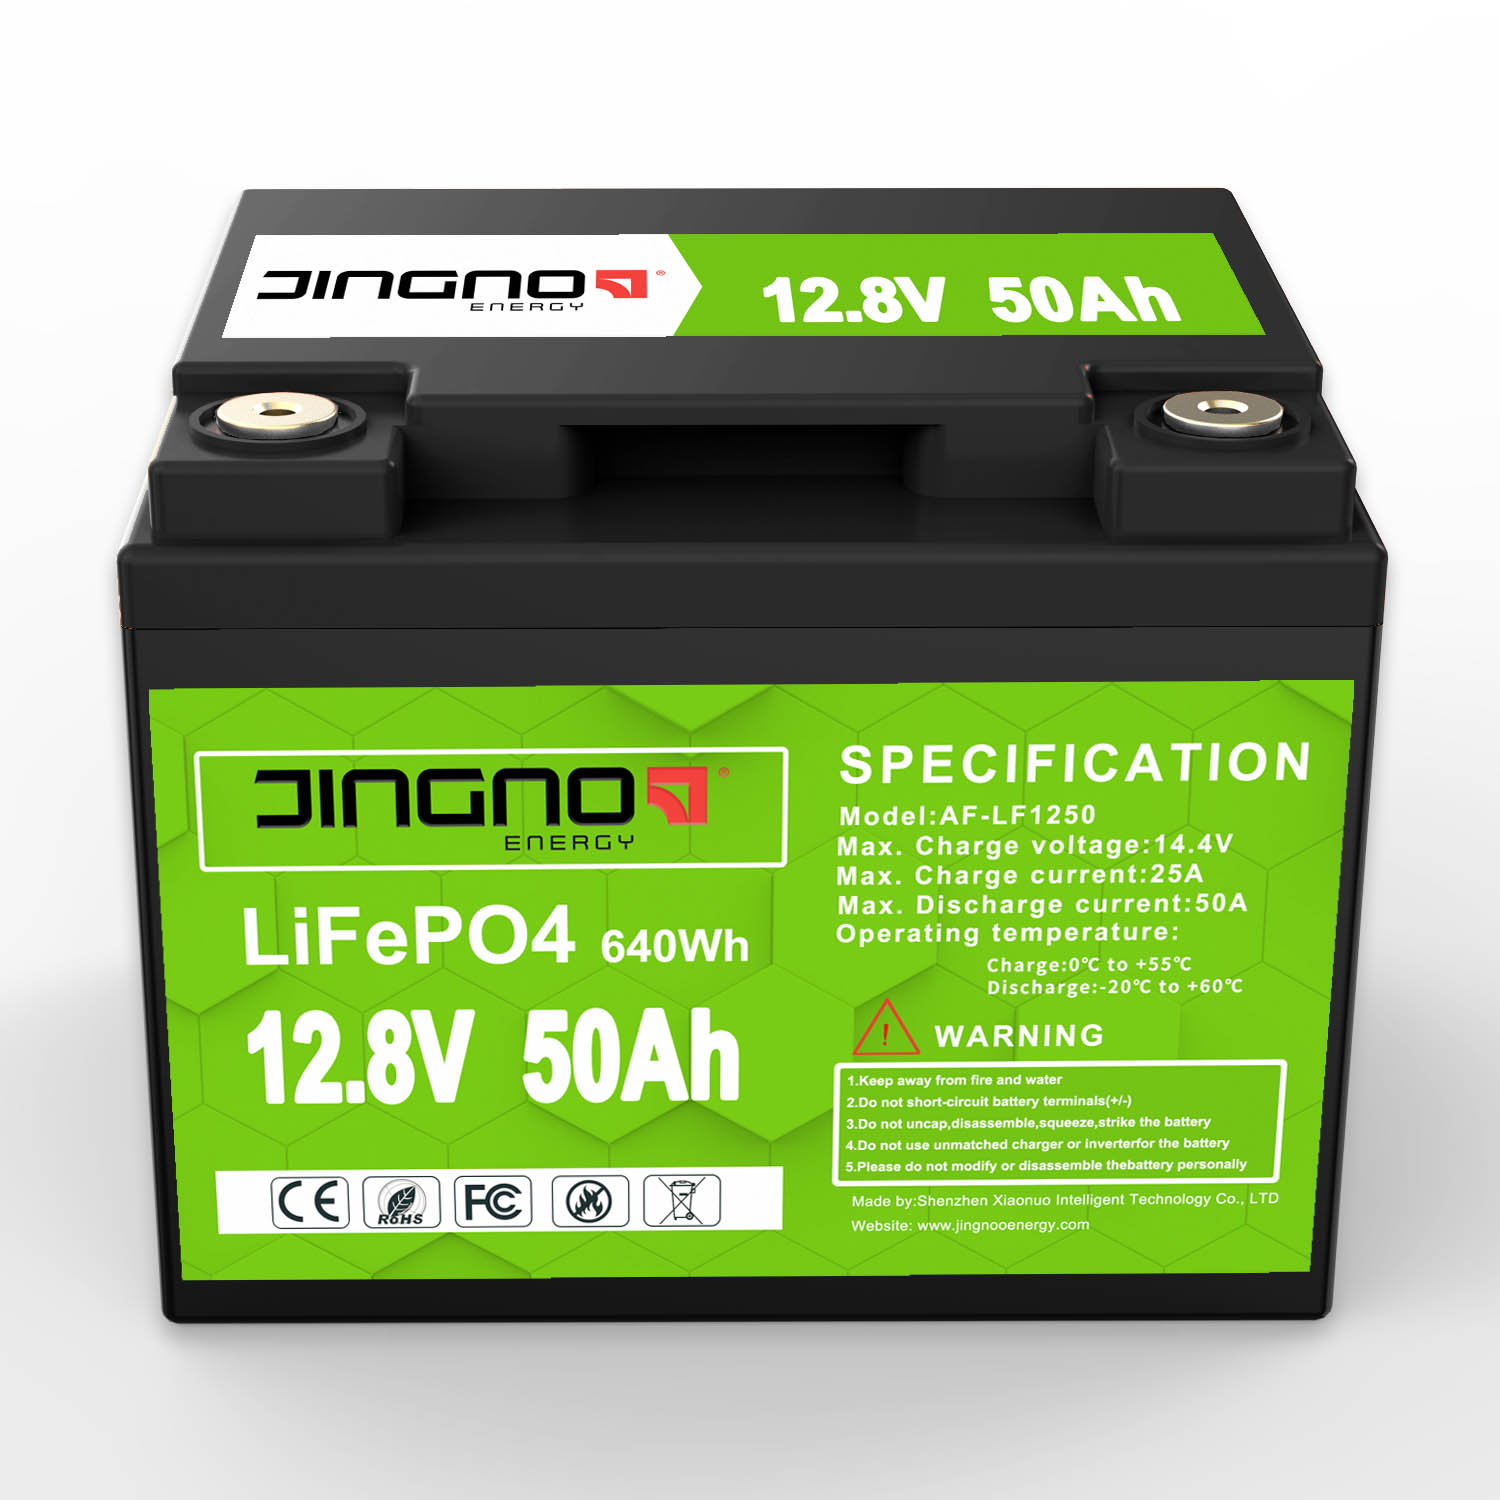 12.8V 50ah LiFe PO4 Lithium Battery